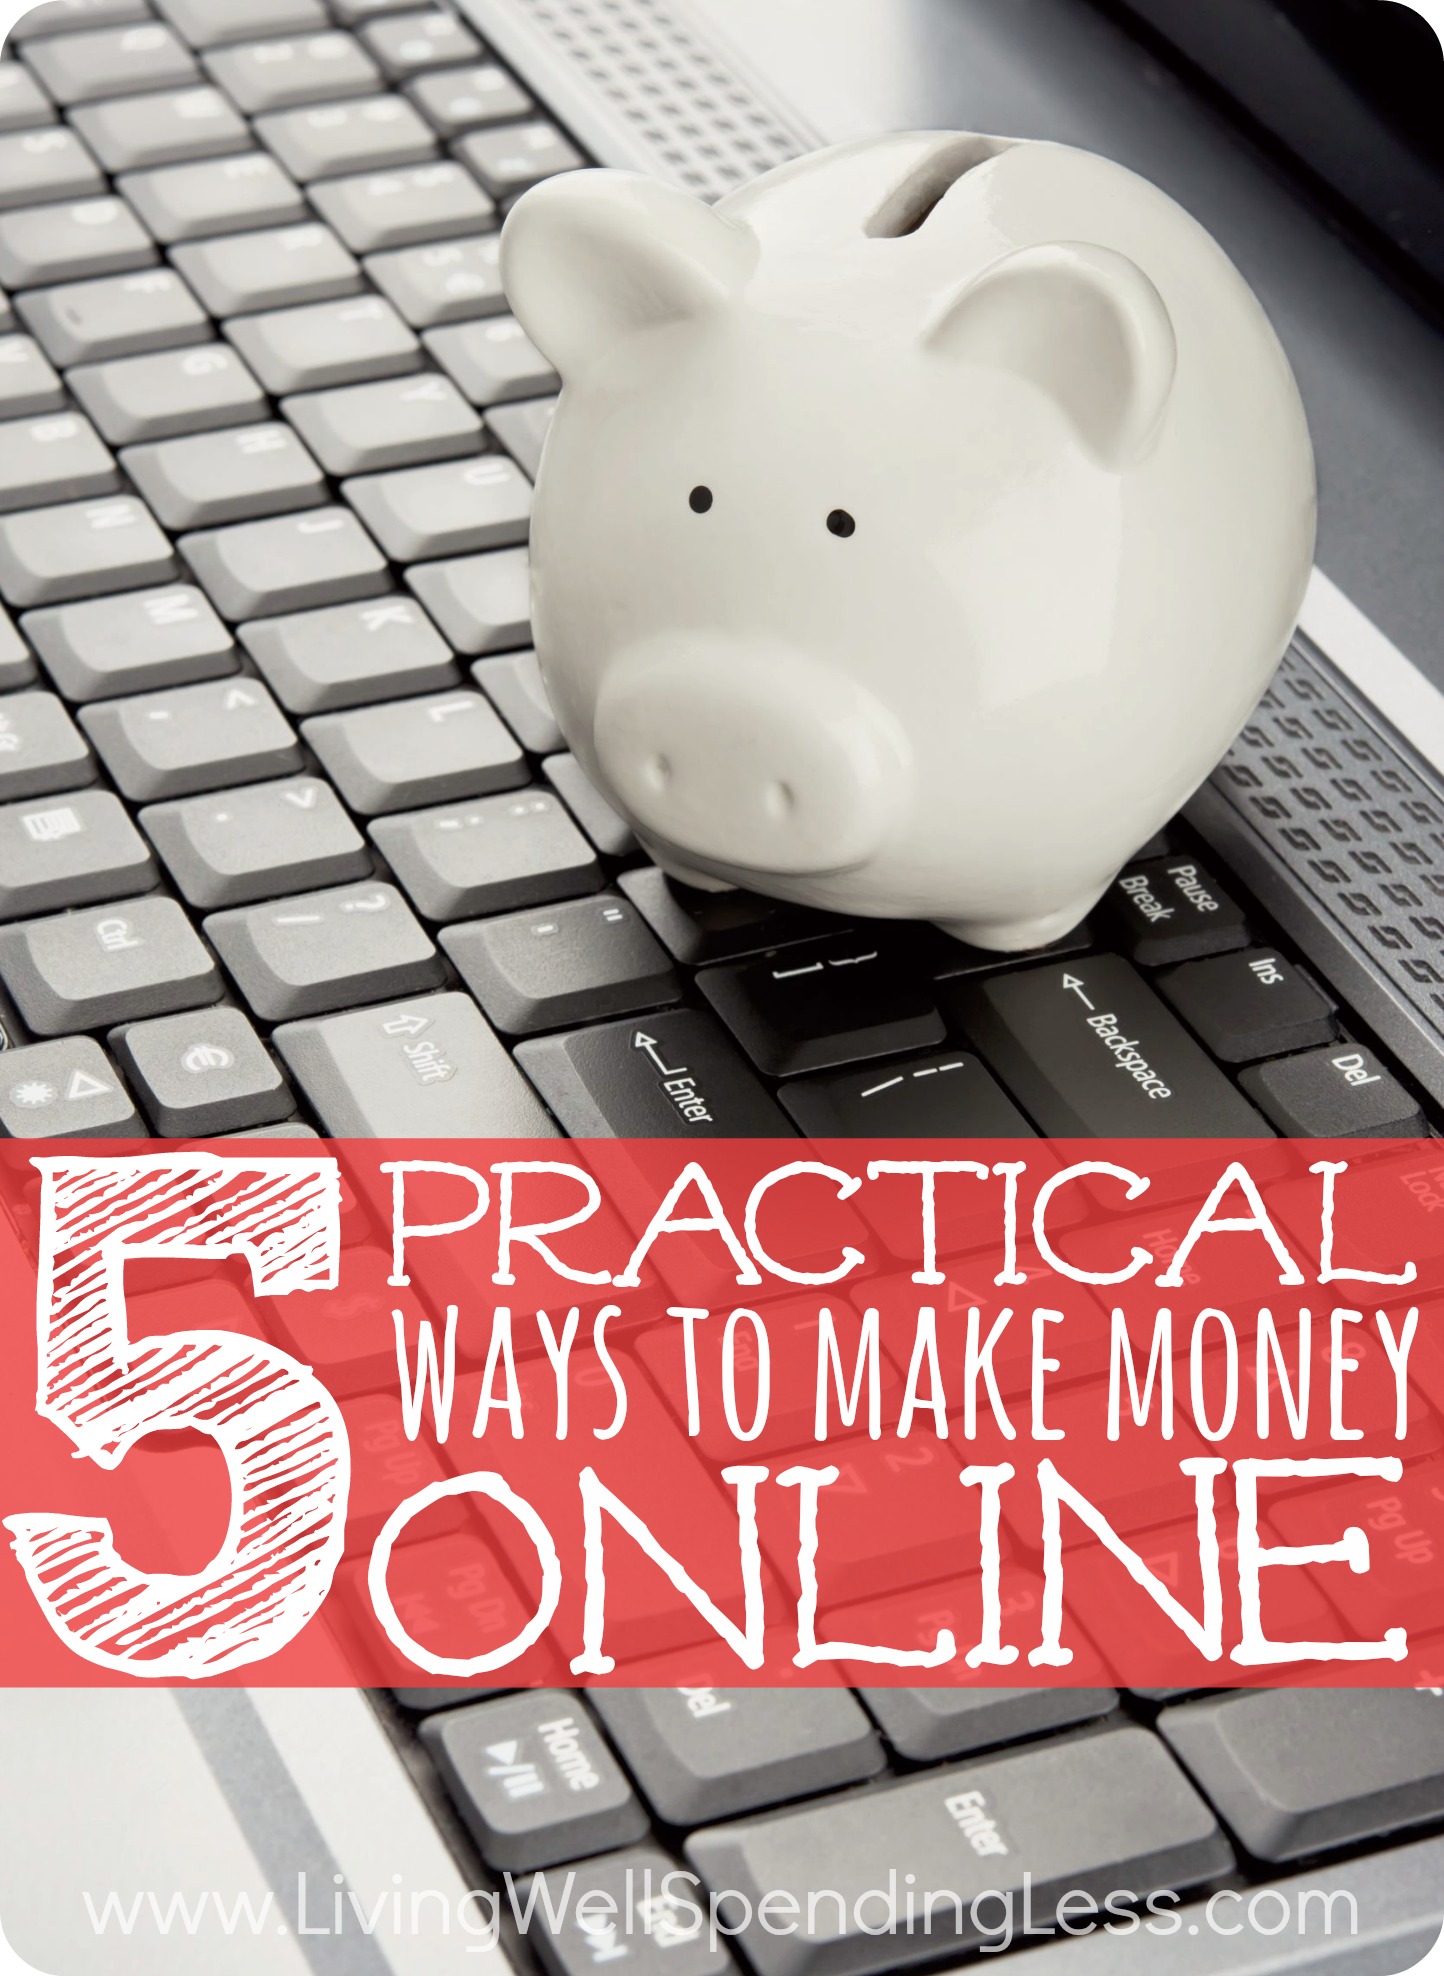 5 Practical Ways to Earn Money Online | Living Well Spending Less